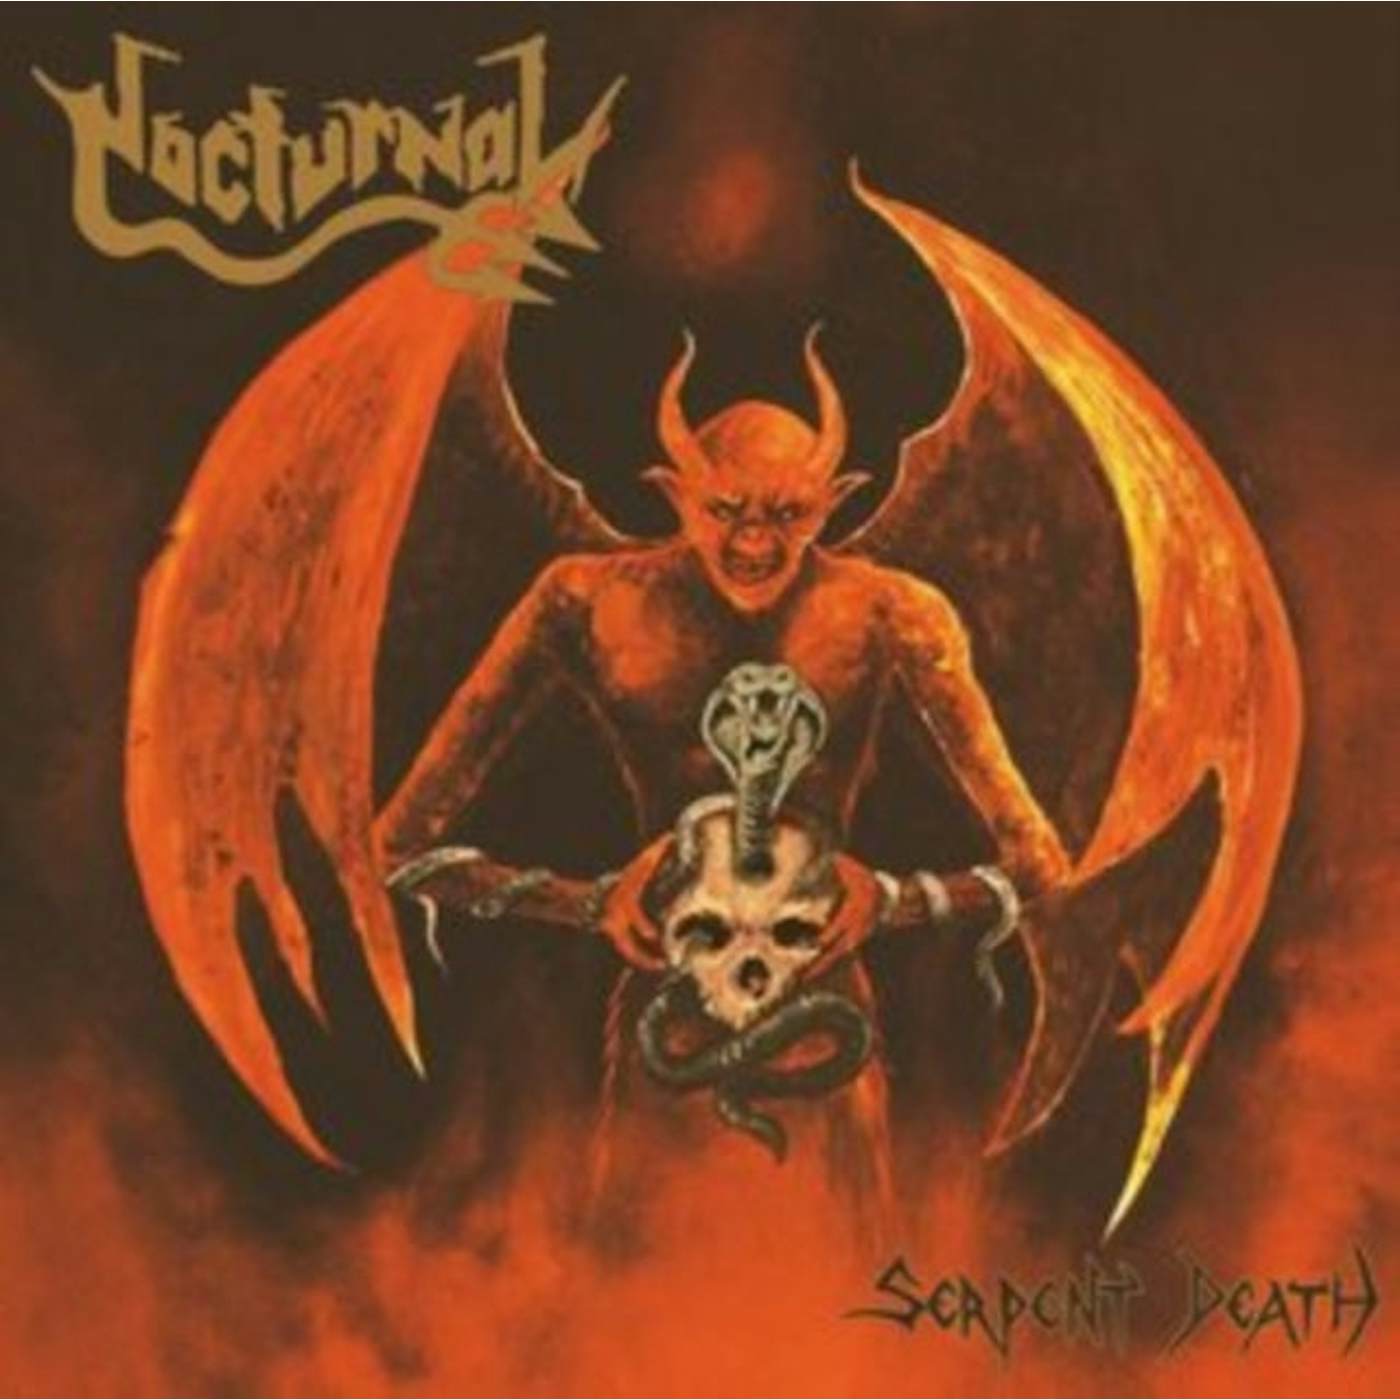 Nocturnal CD - Serpent Death